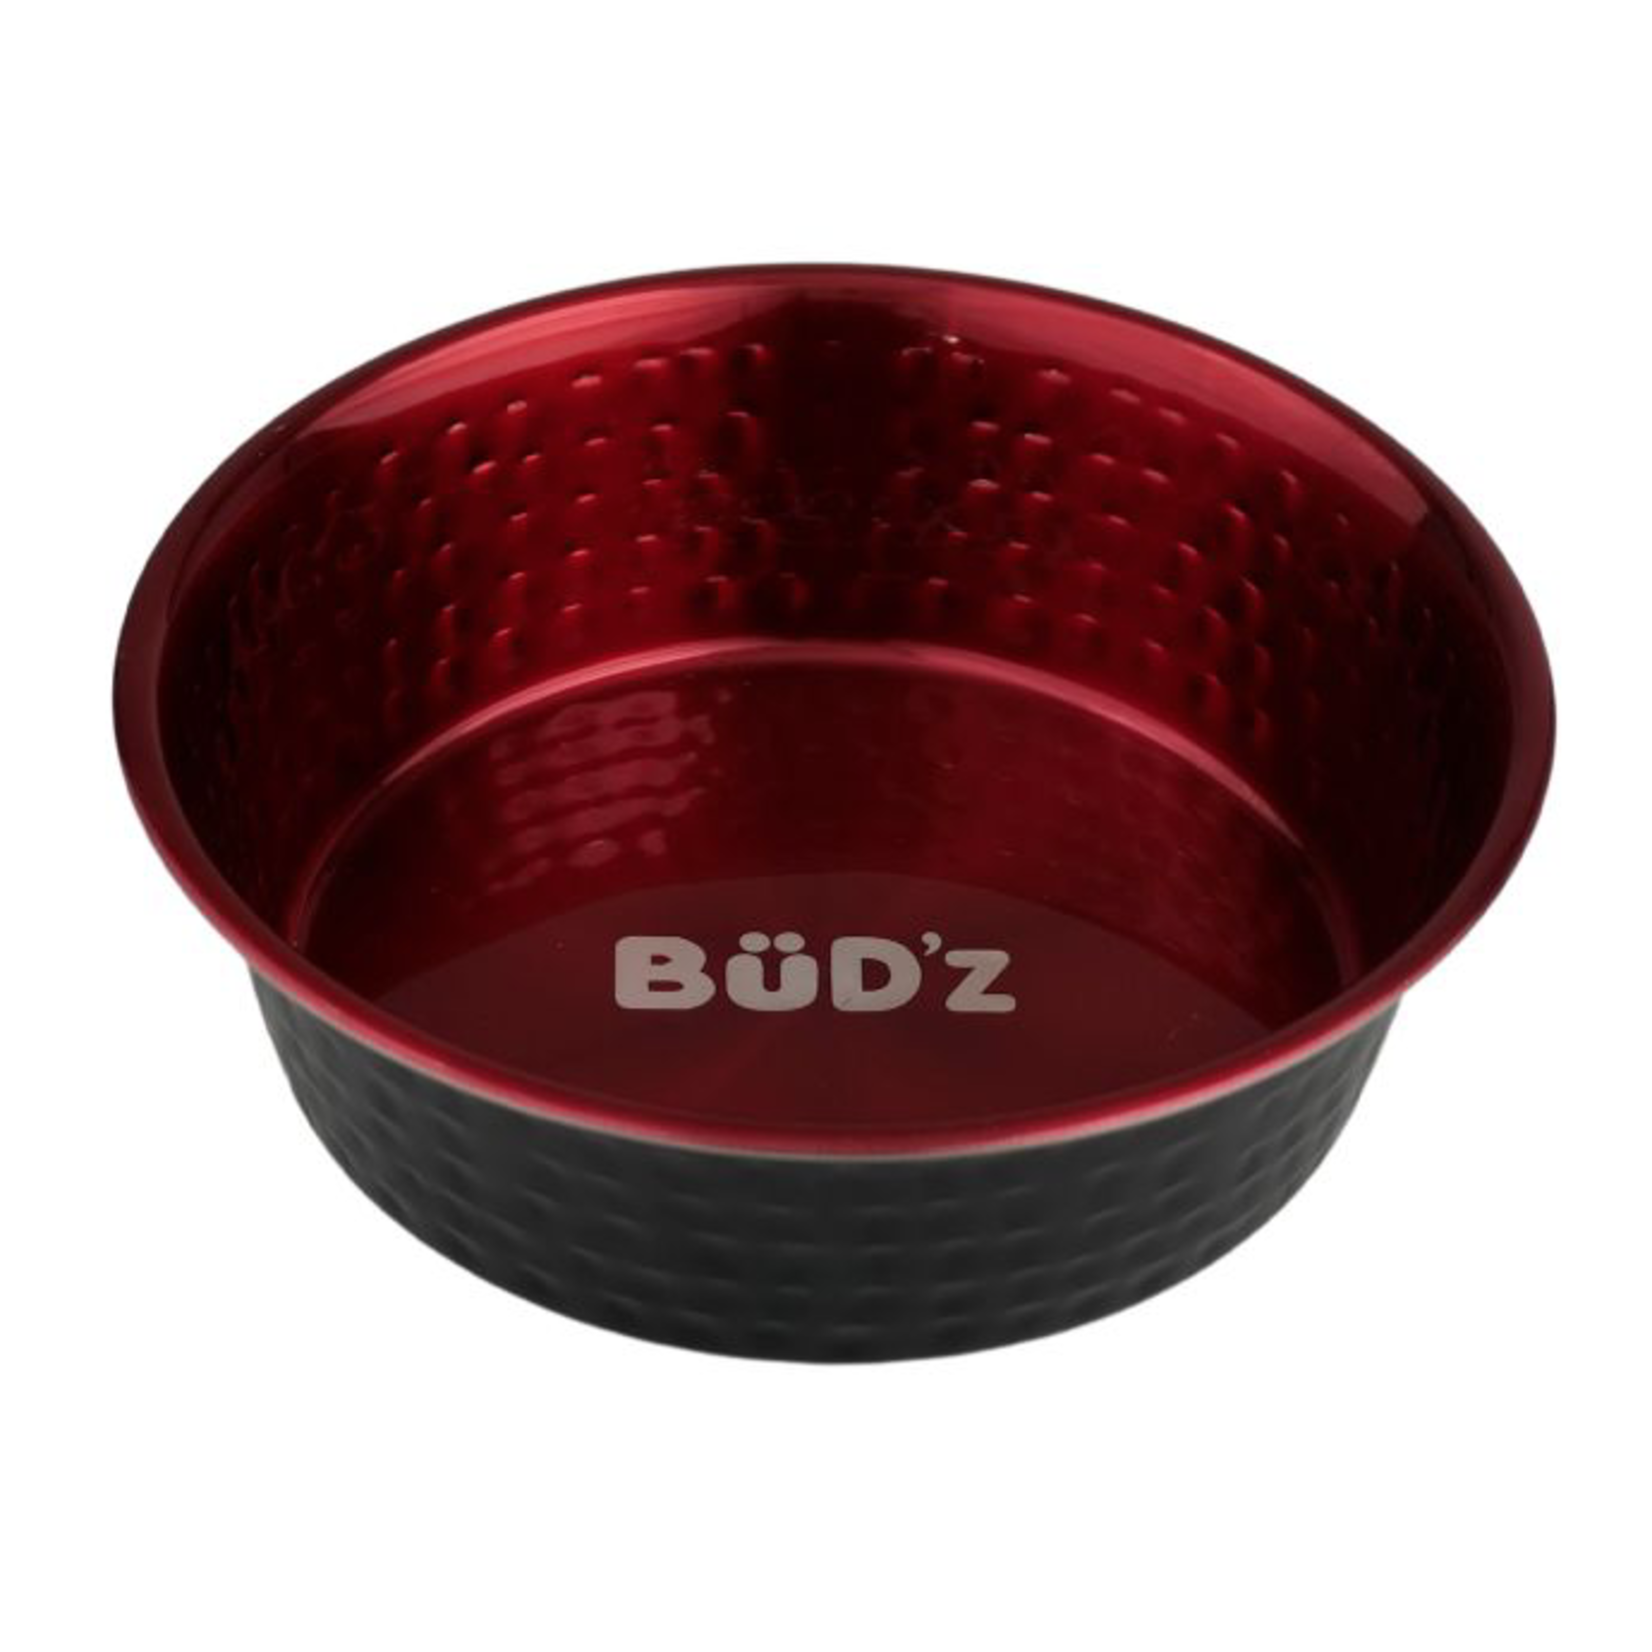 BUD-Z BUD'Z STAINLESS STEEL BOWL, HAMMERED INTERIOR - RED 3900ml (132oz)